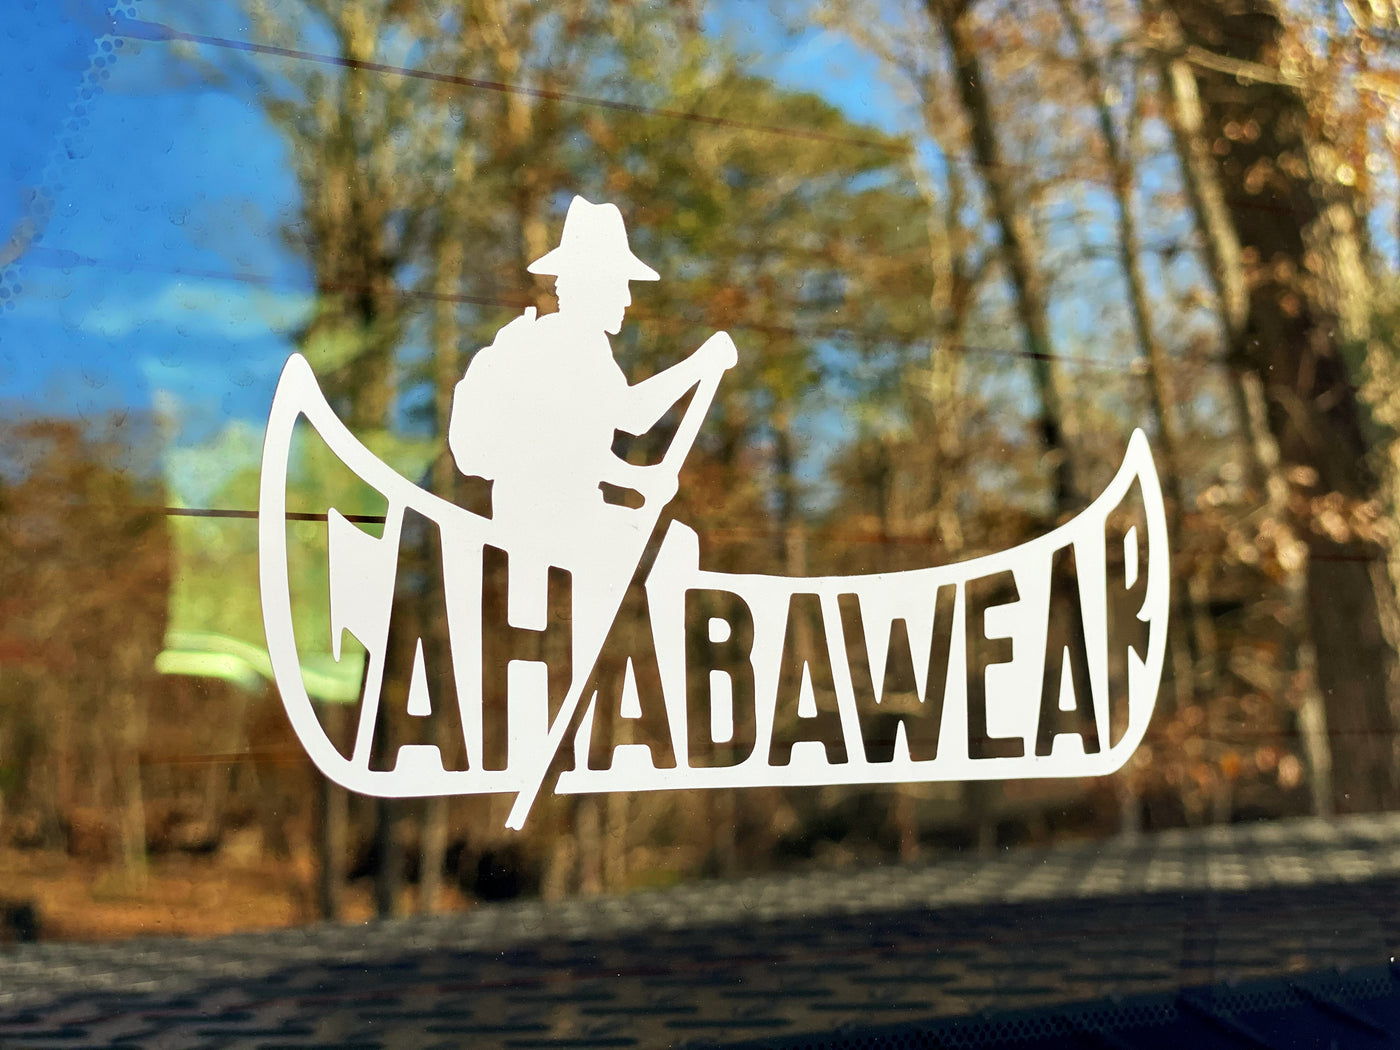 Cahabawear Signature Canoe Transfer Sticker